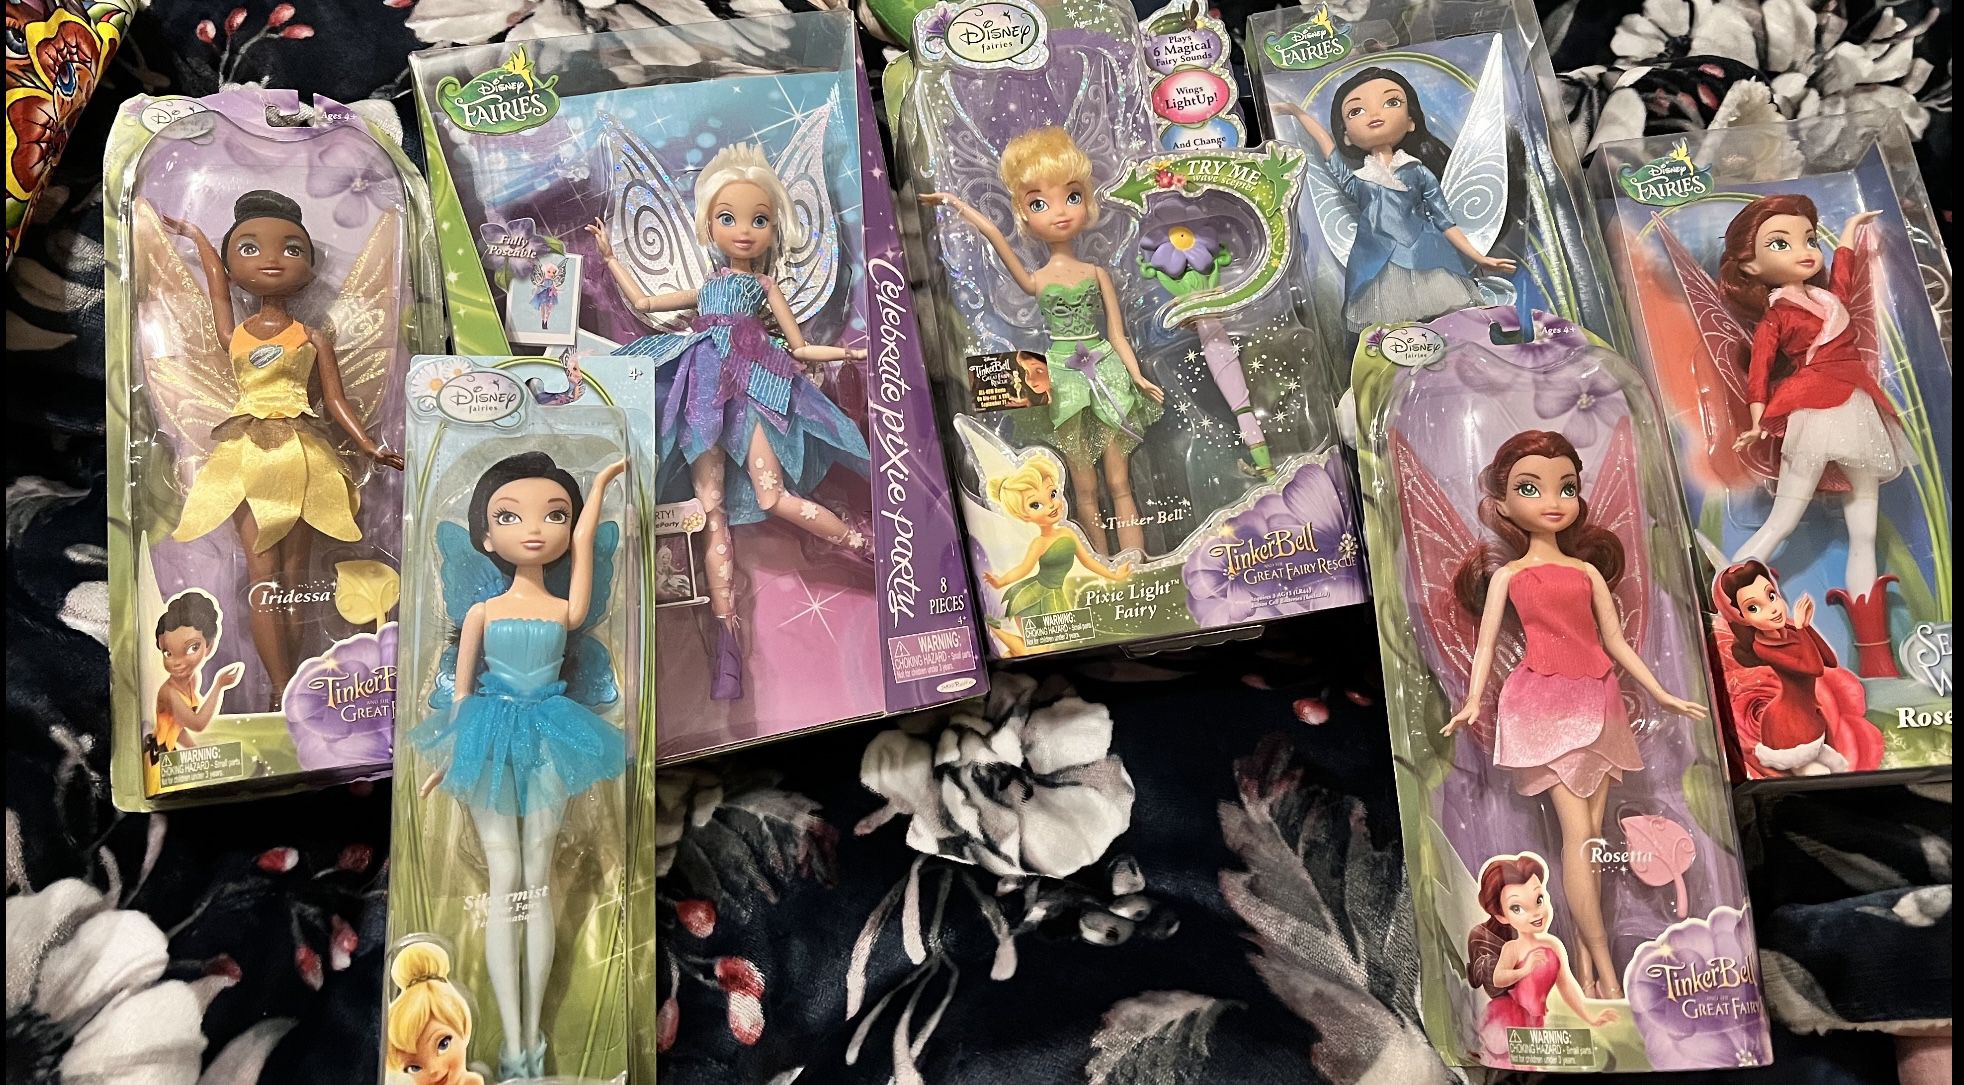 Disney Princess Tinker bell Set Collectible dolls. Dolls. New. Princess’s 